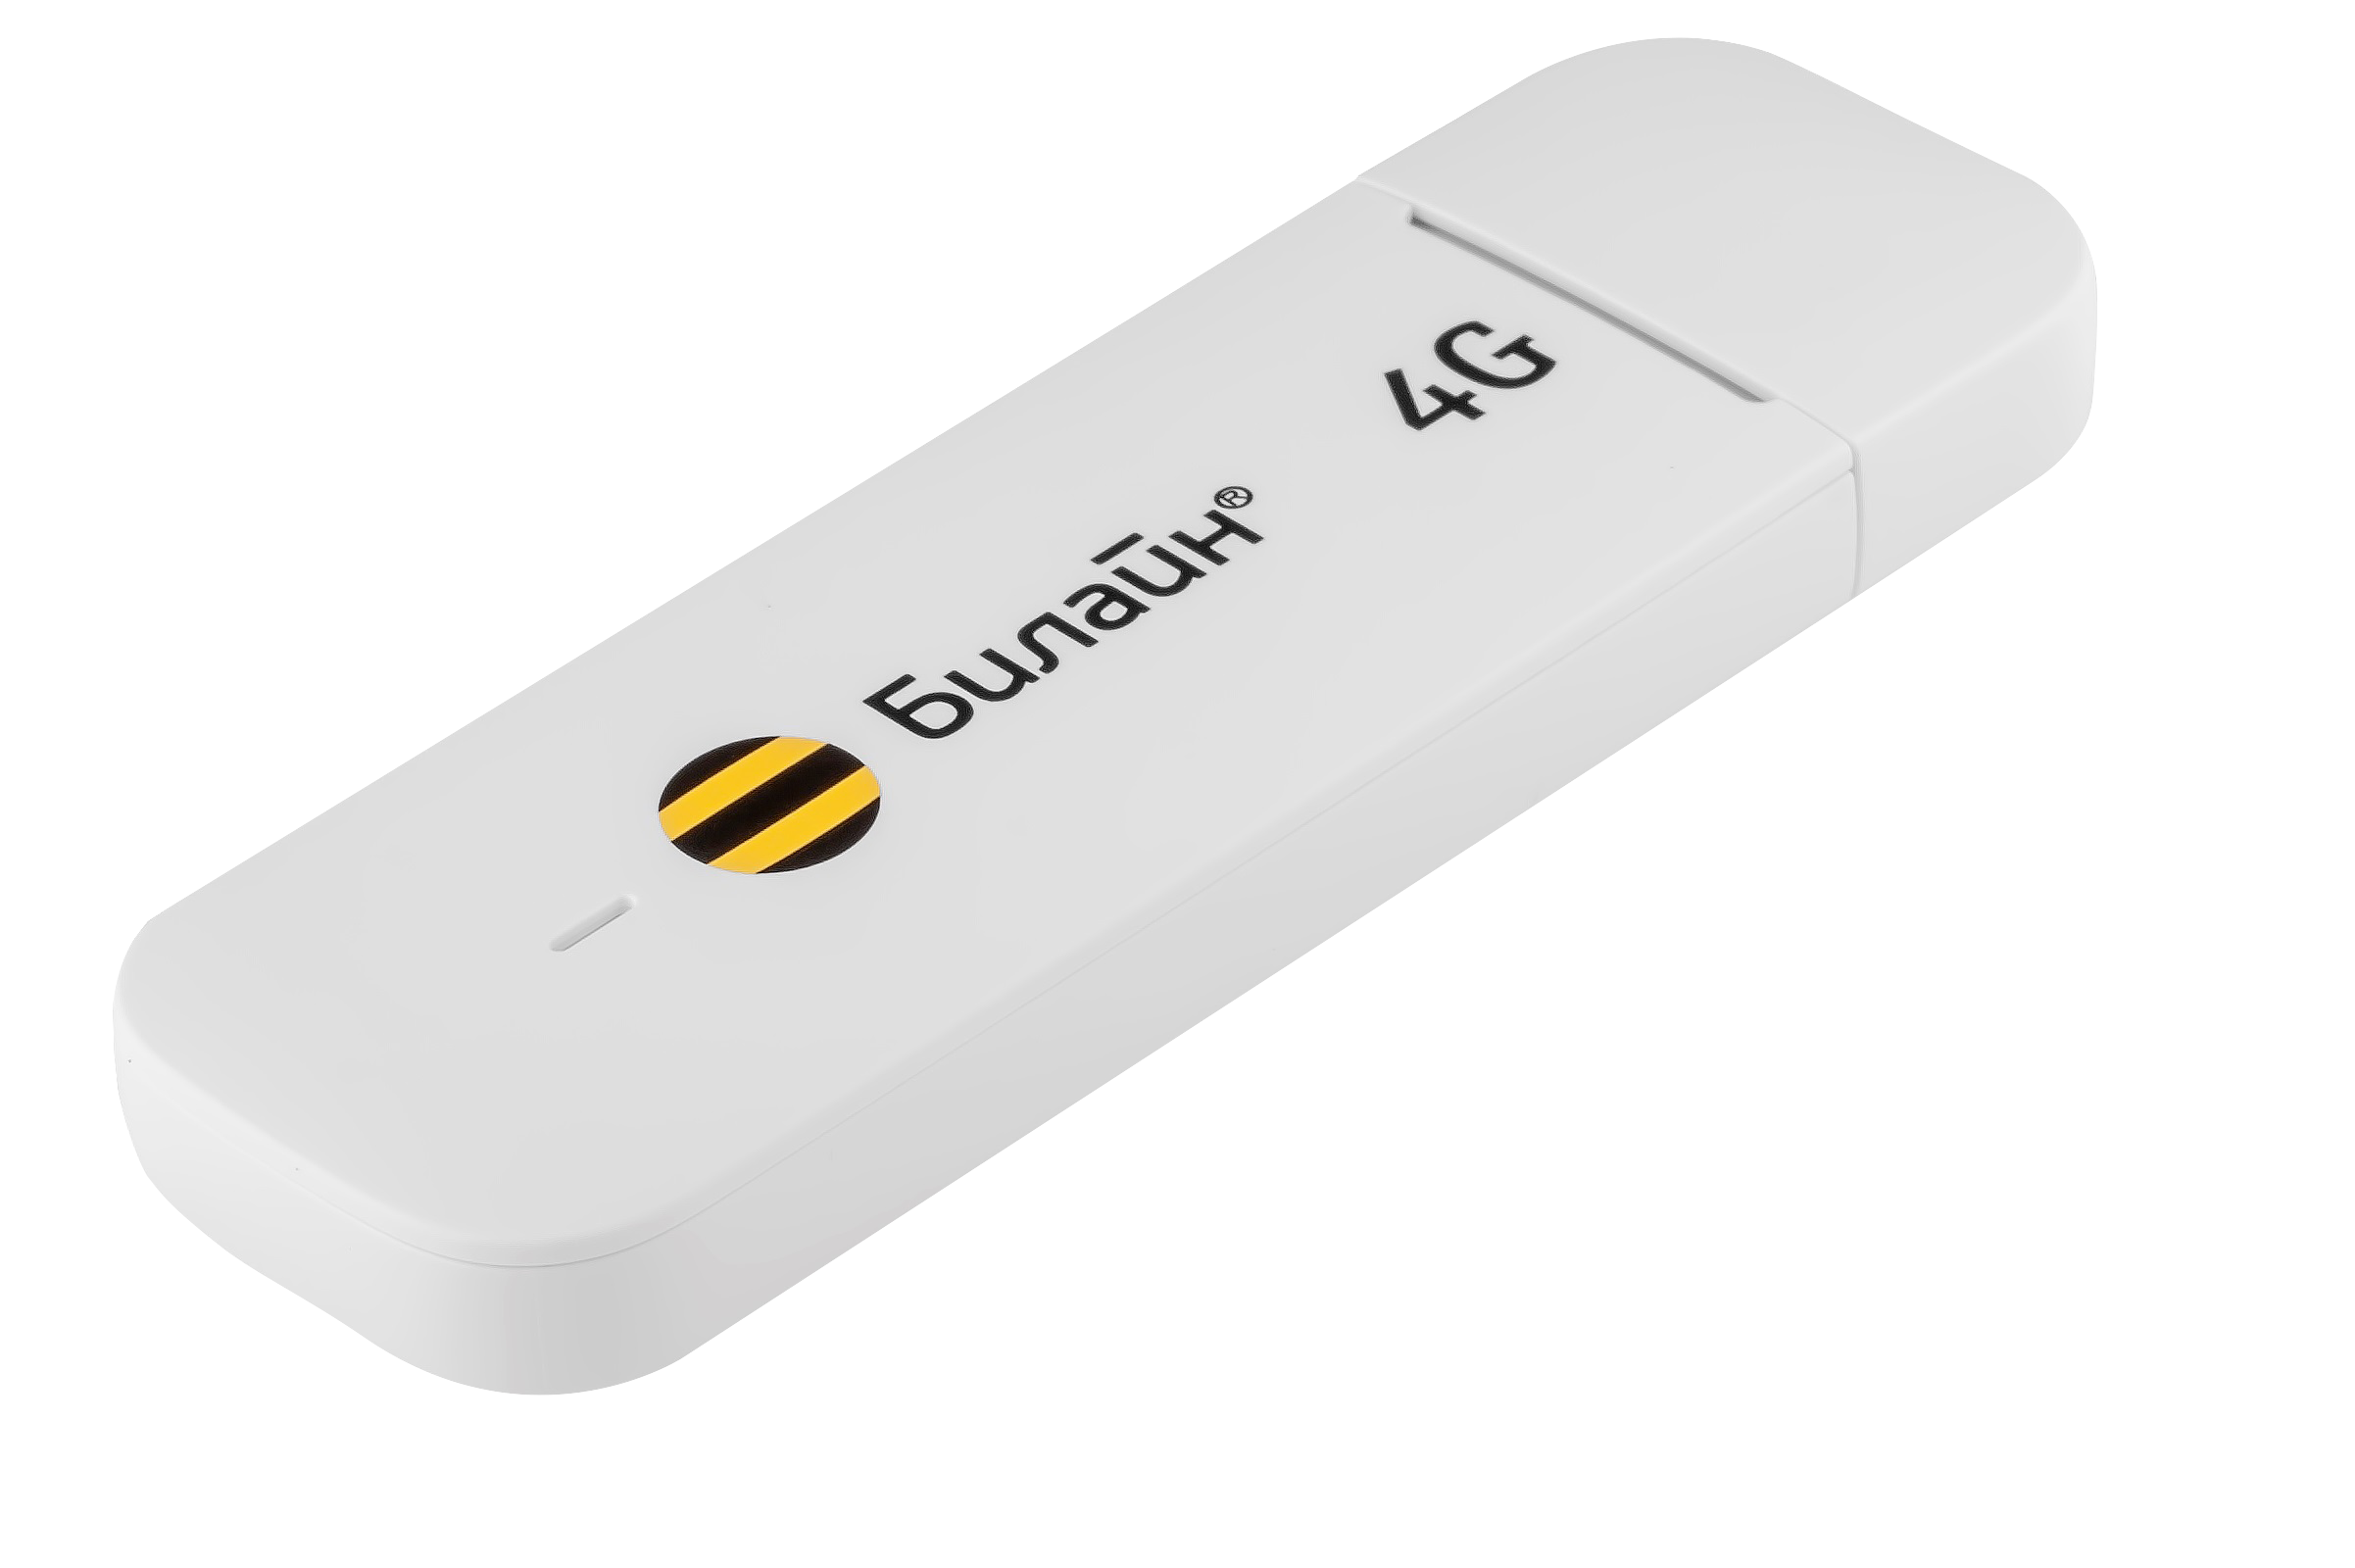 Билайн интернет для модема 4g. USB модем Huawei e3372. Модем Huawei e3372 Билайн. USB модем Beeline 4g. Модем Билайн 4g e3372.